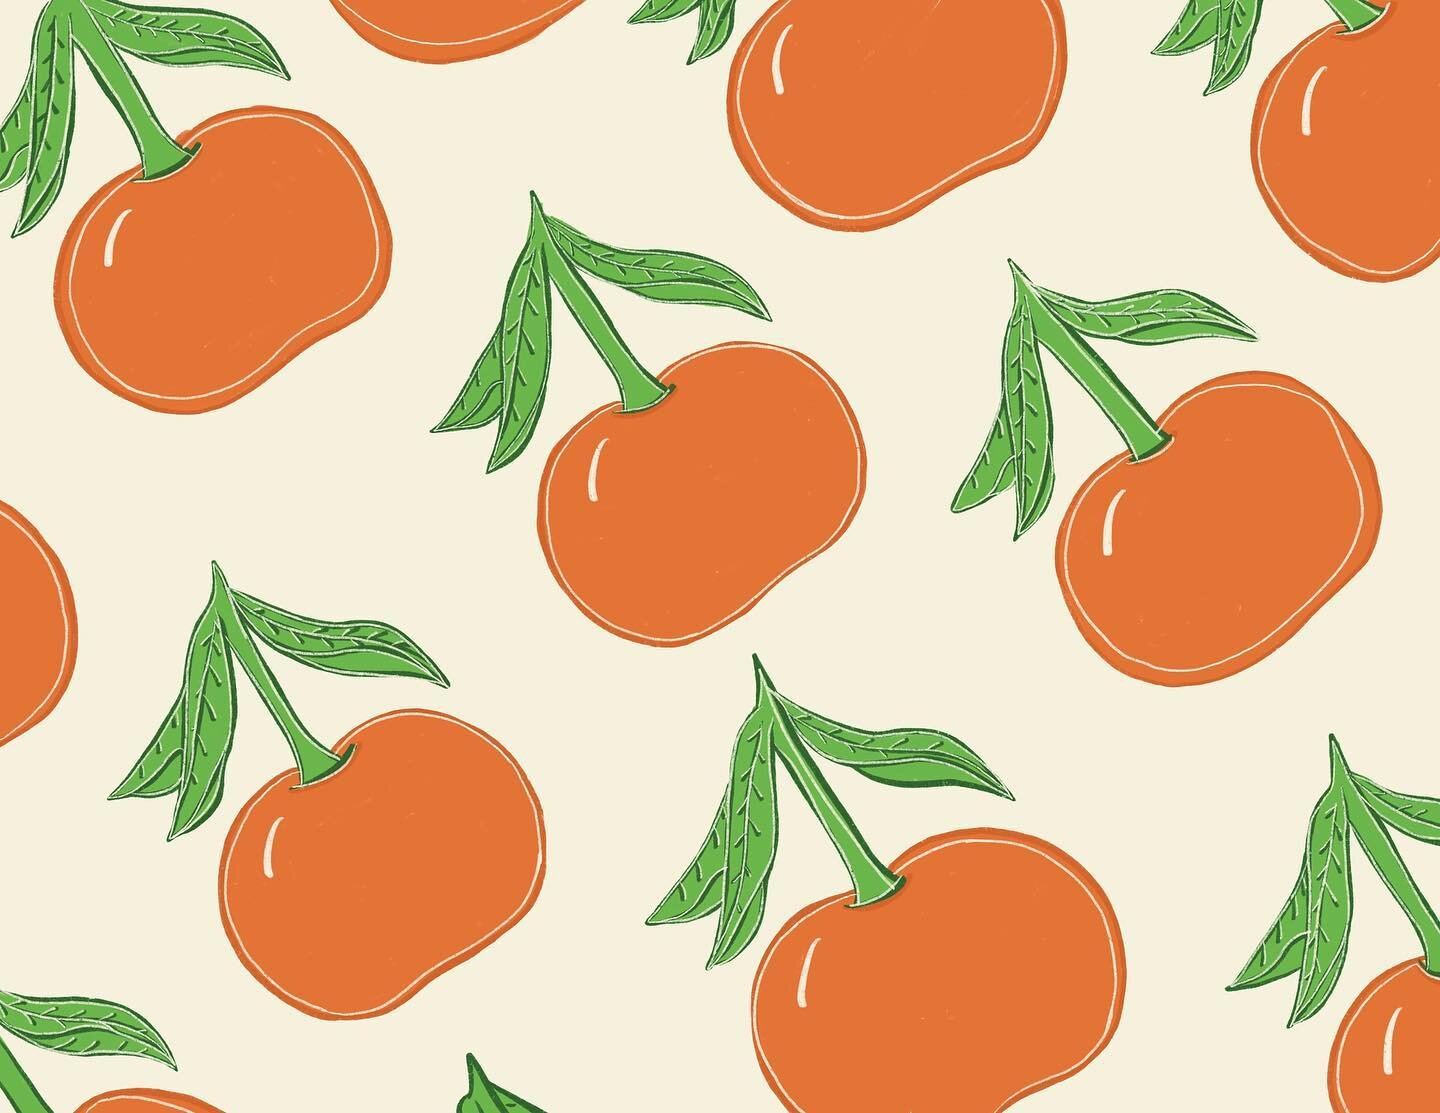 Whats your favorite summer fruit? Another fruit print, swipe for a time lapse 🍊#spiritual #fruitsbasket #fruit #print #pattern #patterndesign #cute #illustration #illustrator #latina #dacadreamers #shop #shoplocal #boston #newyork #smallbusinessowne